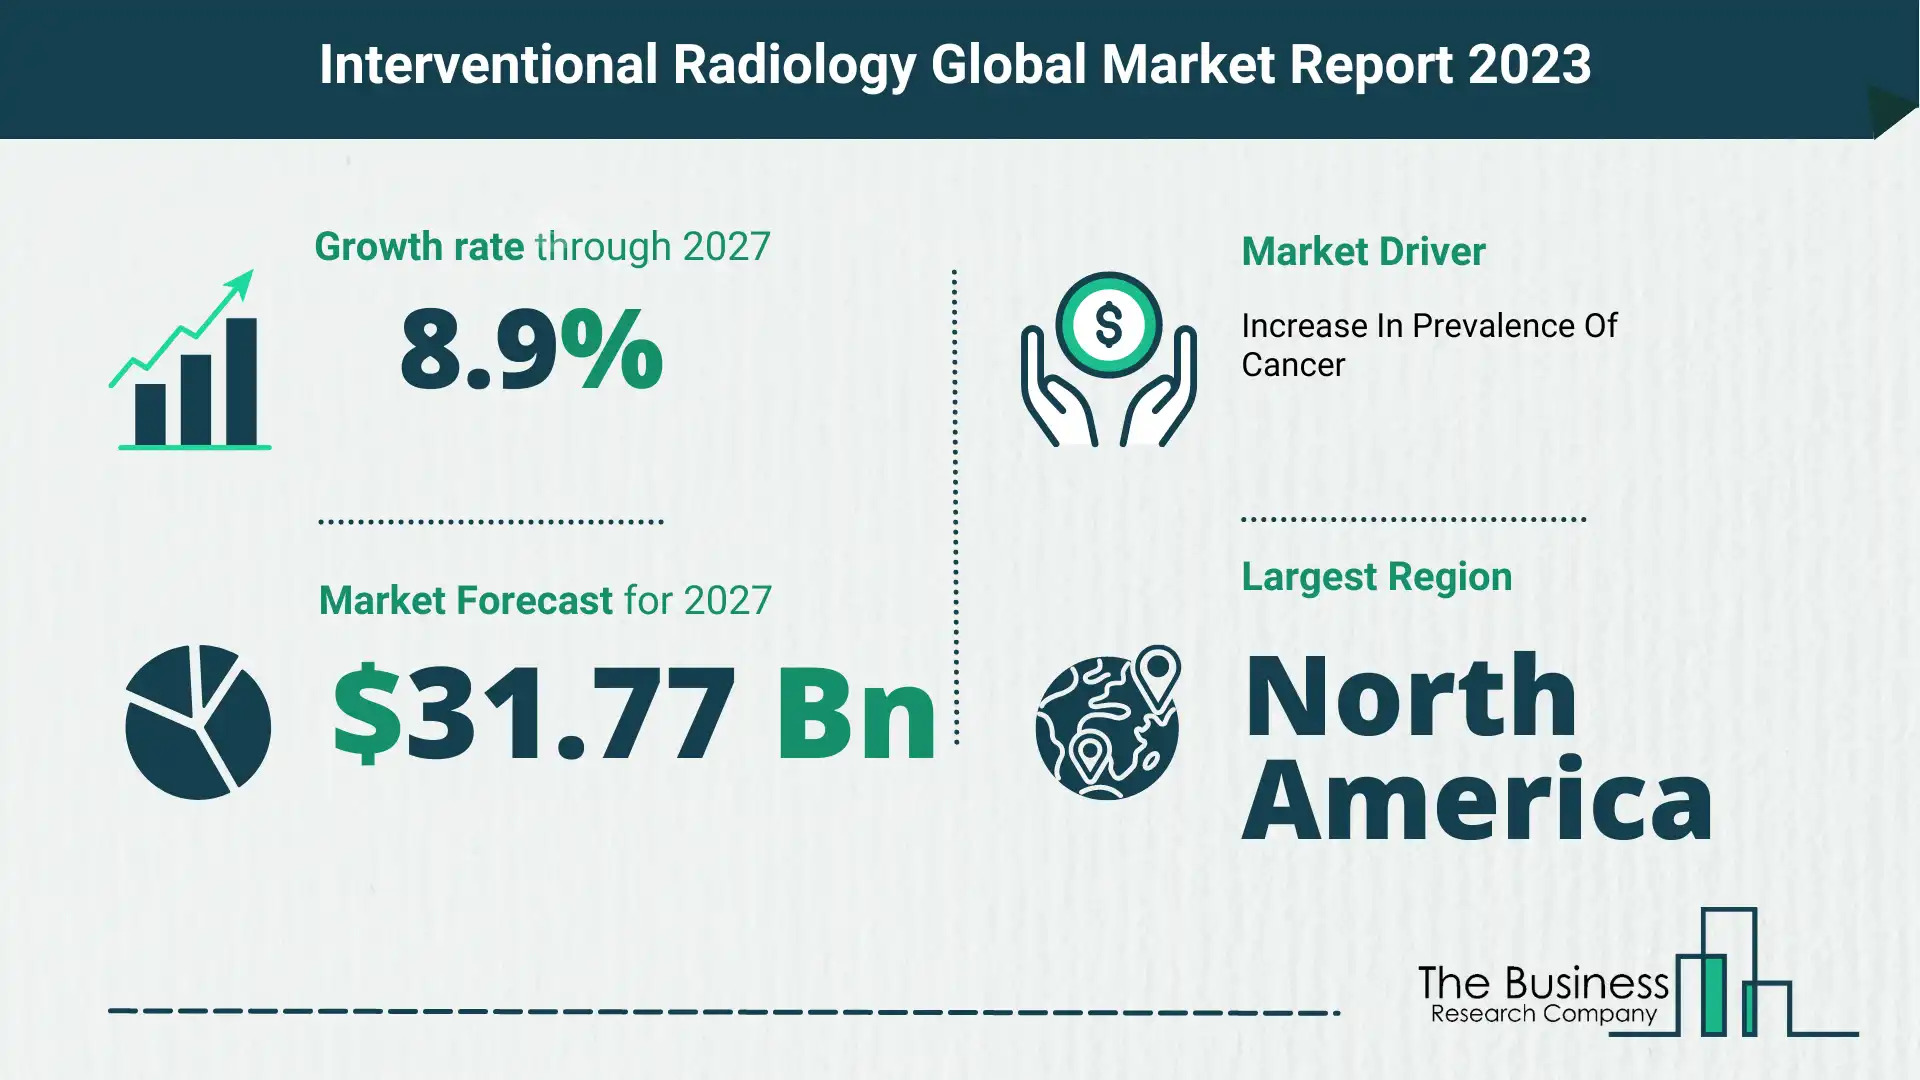 interventional radiology market